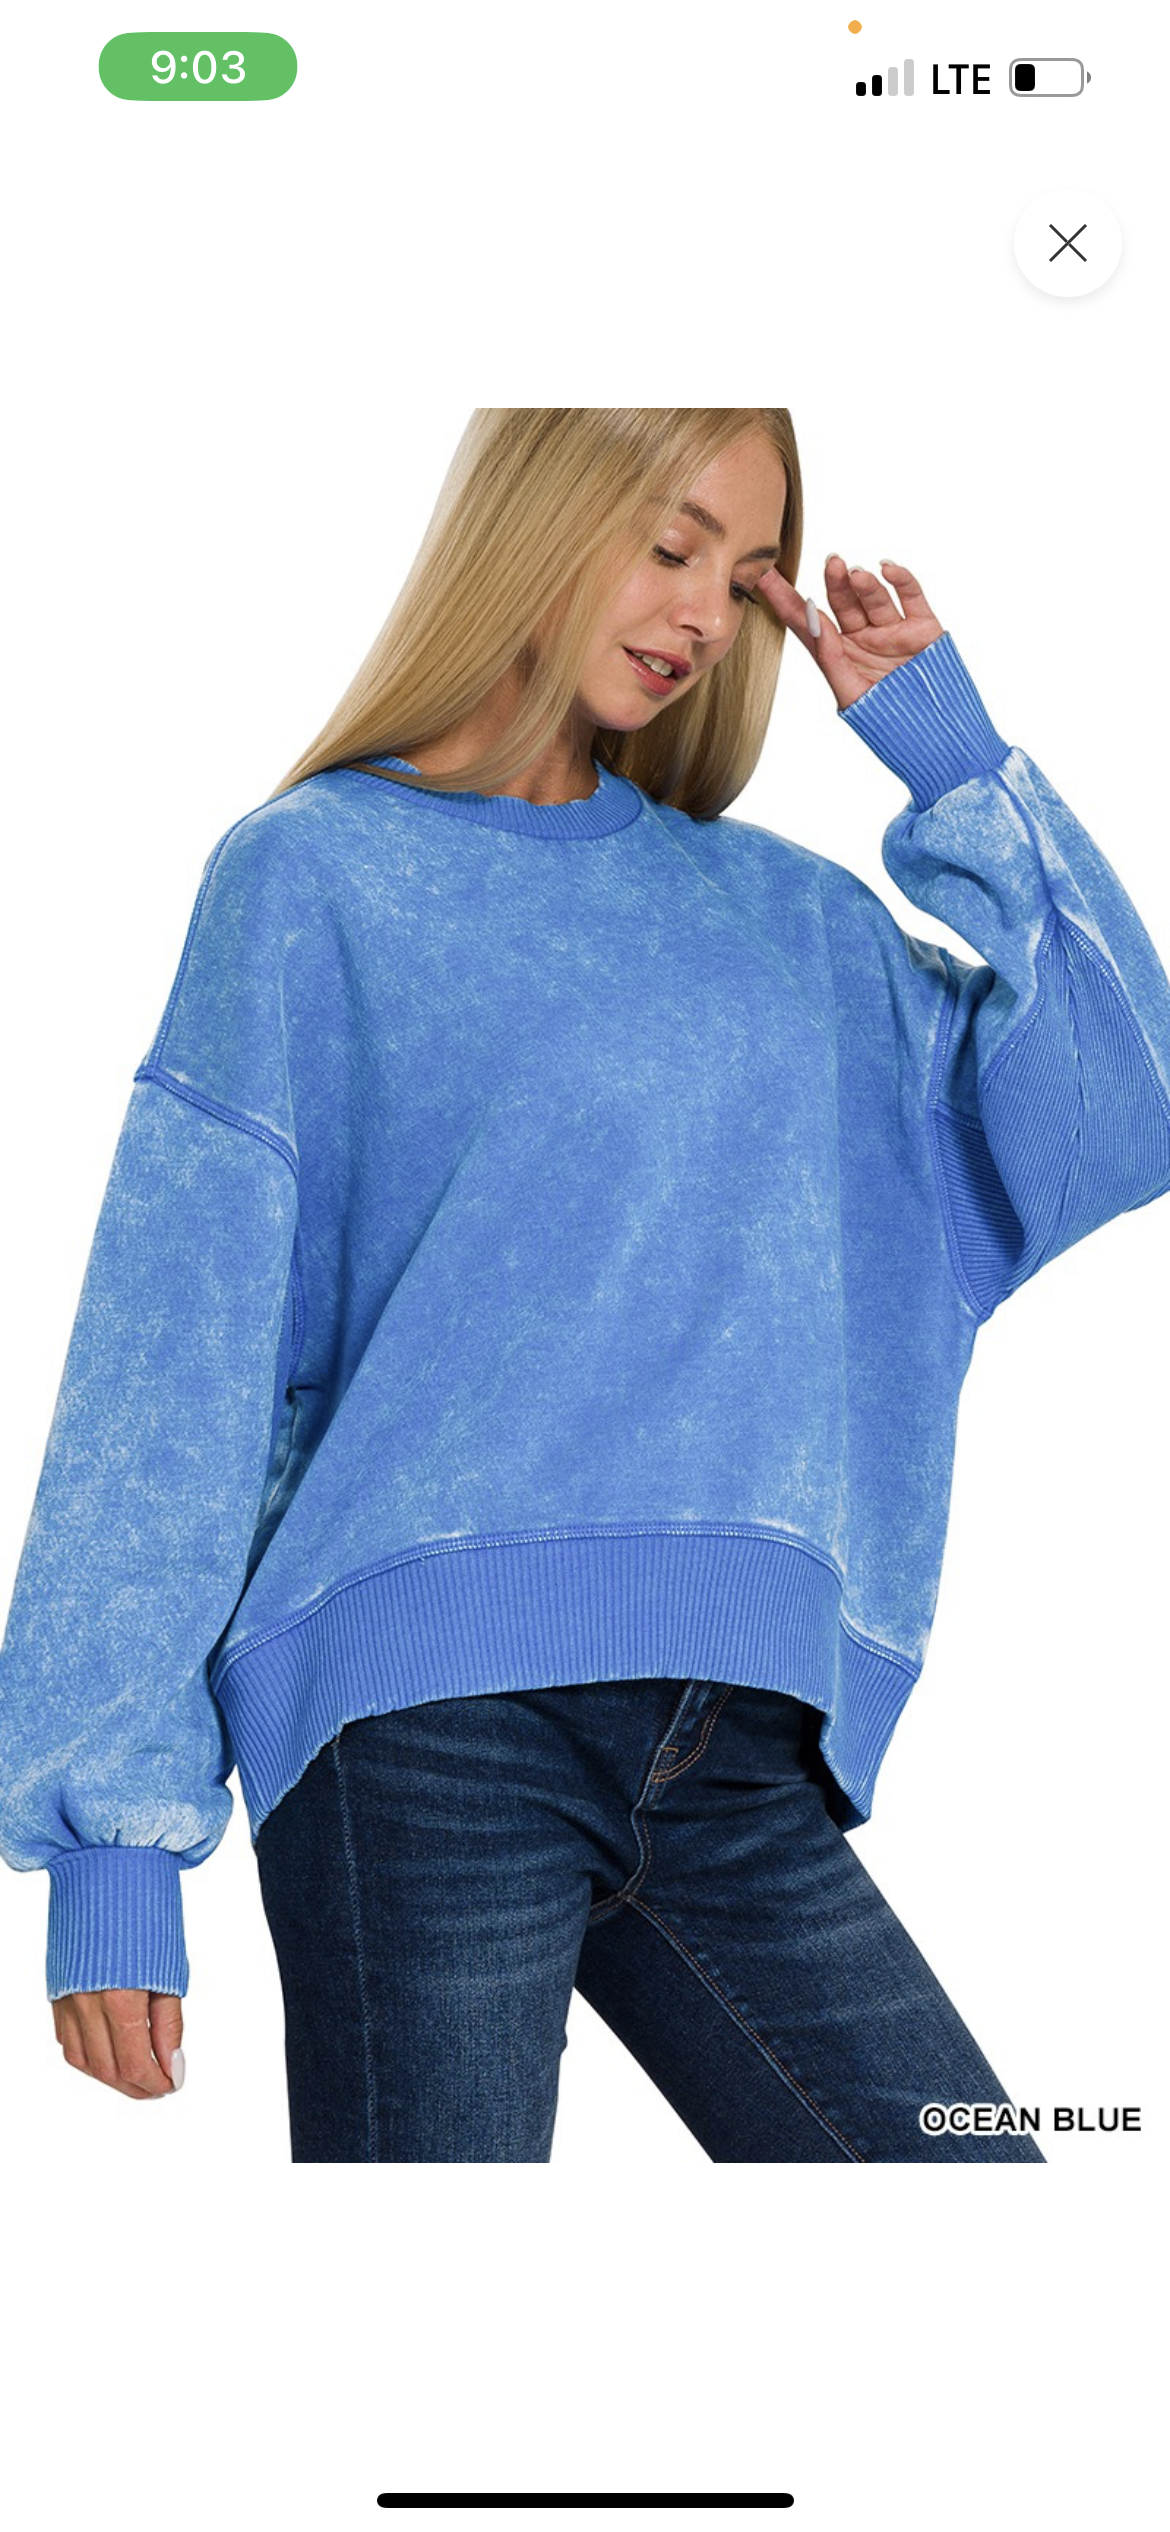 Ocean blue sweatshirt